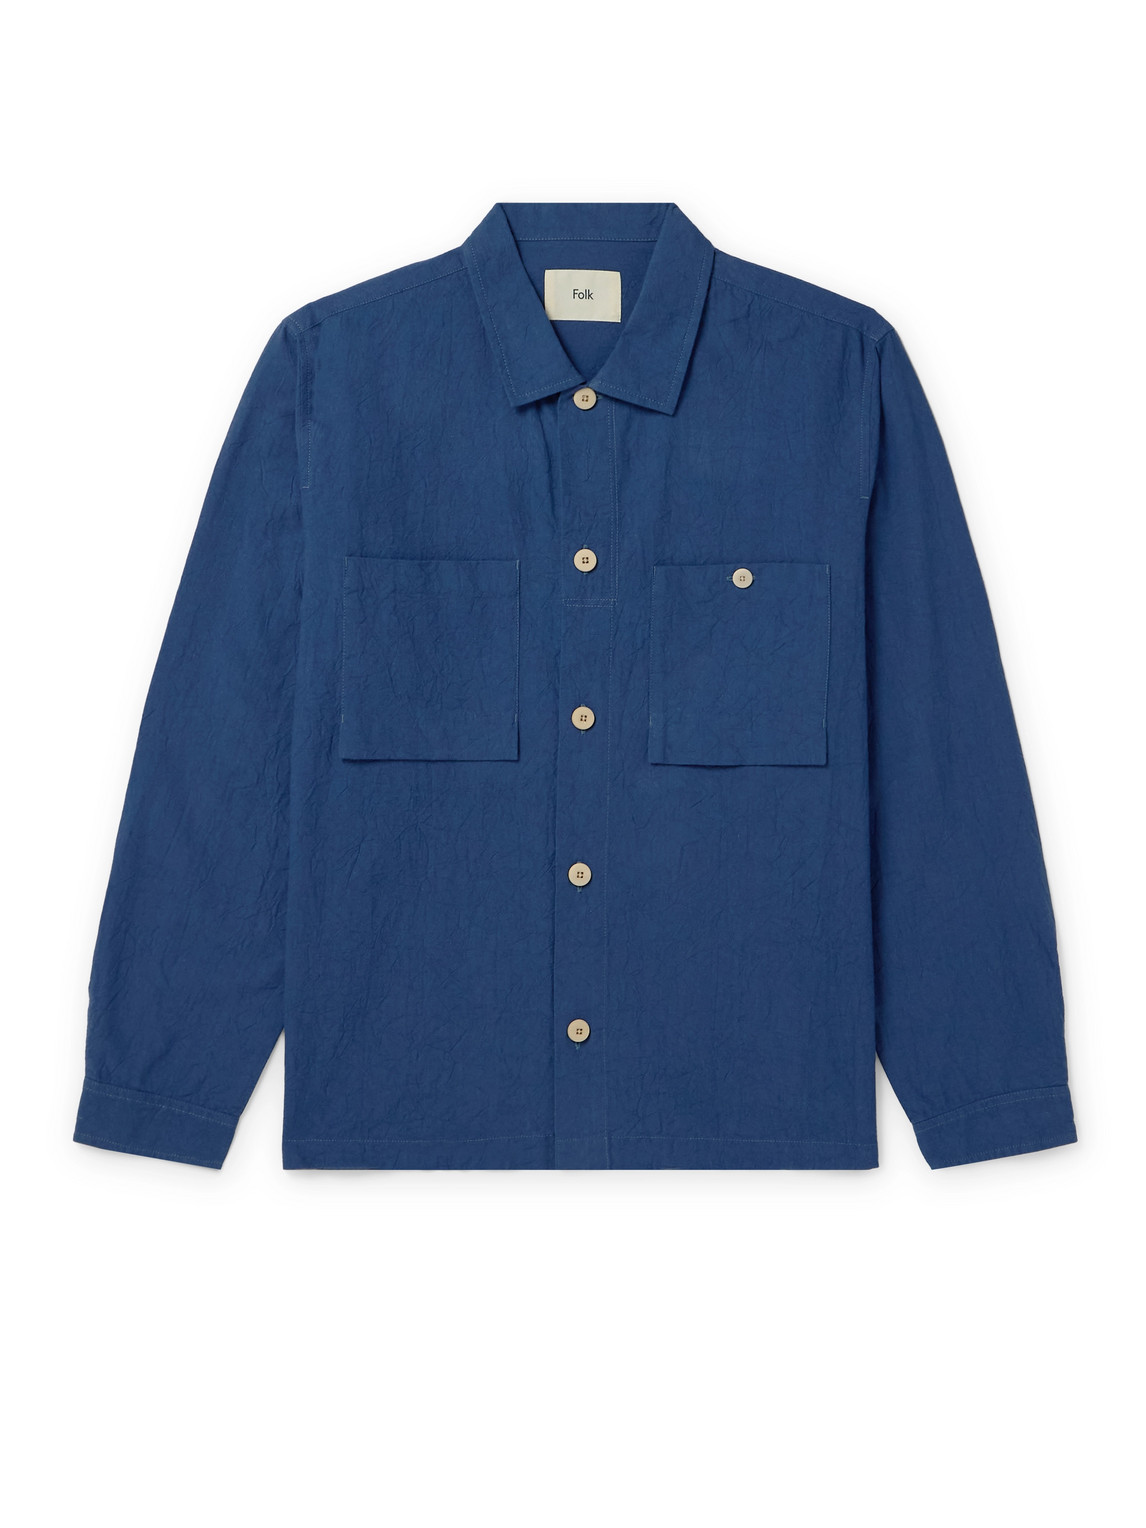 Folk Cotton Overshirt In Blue